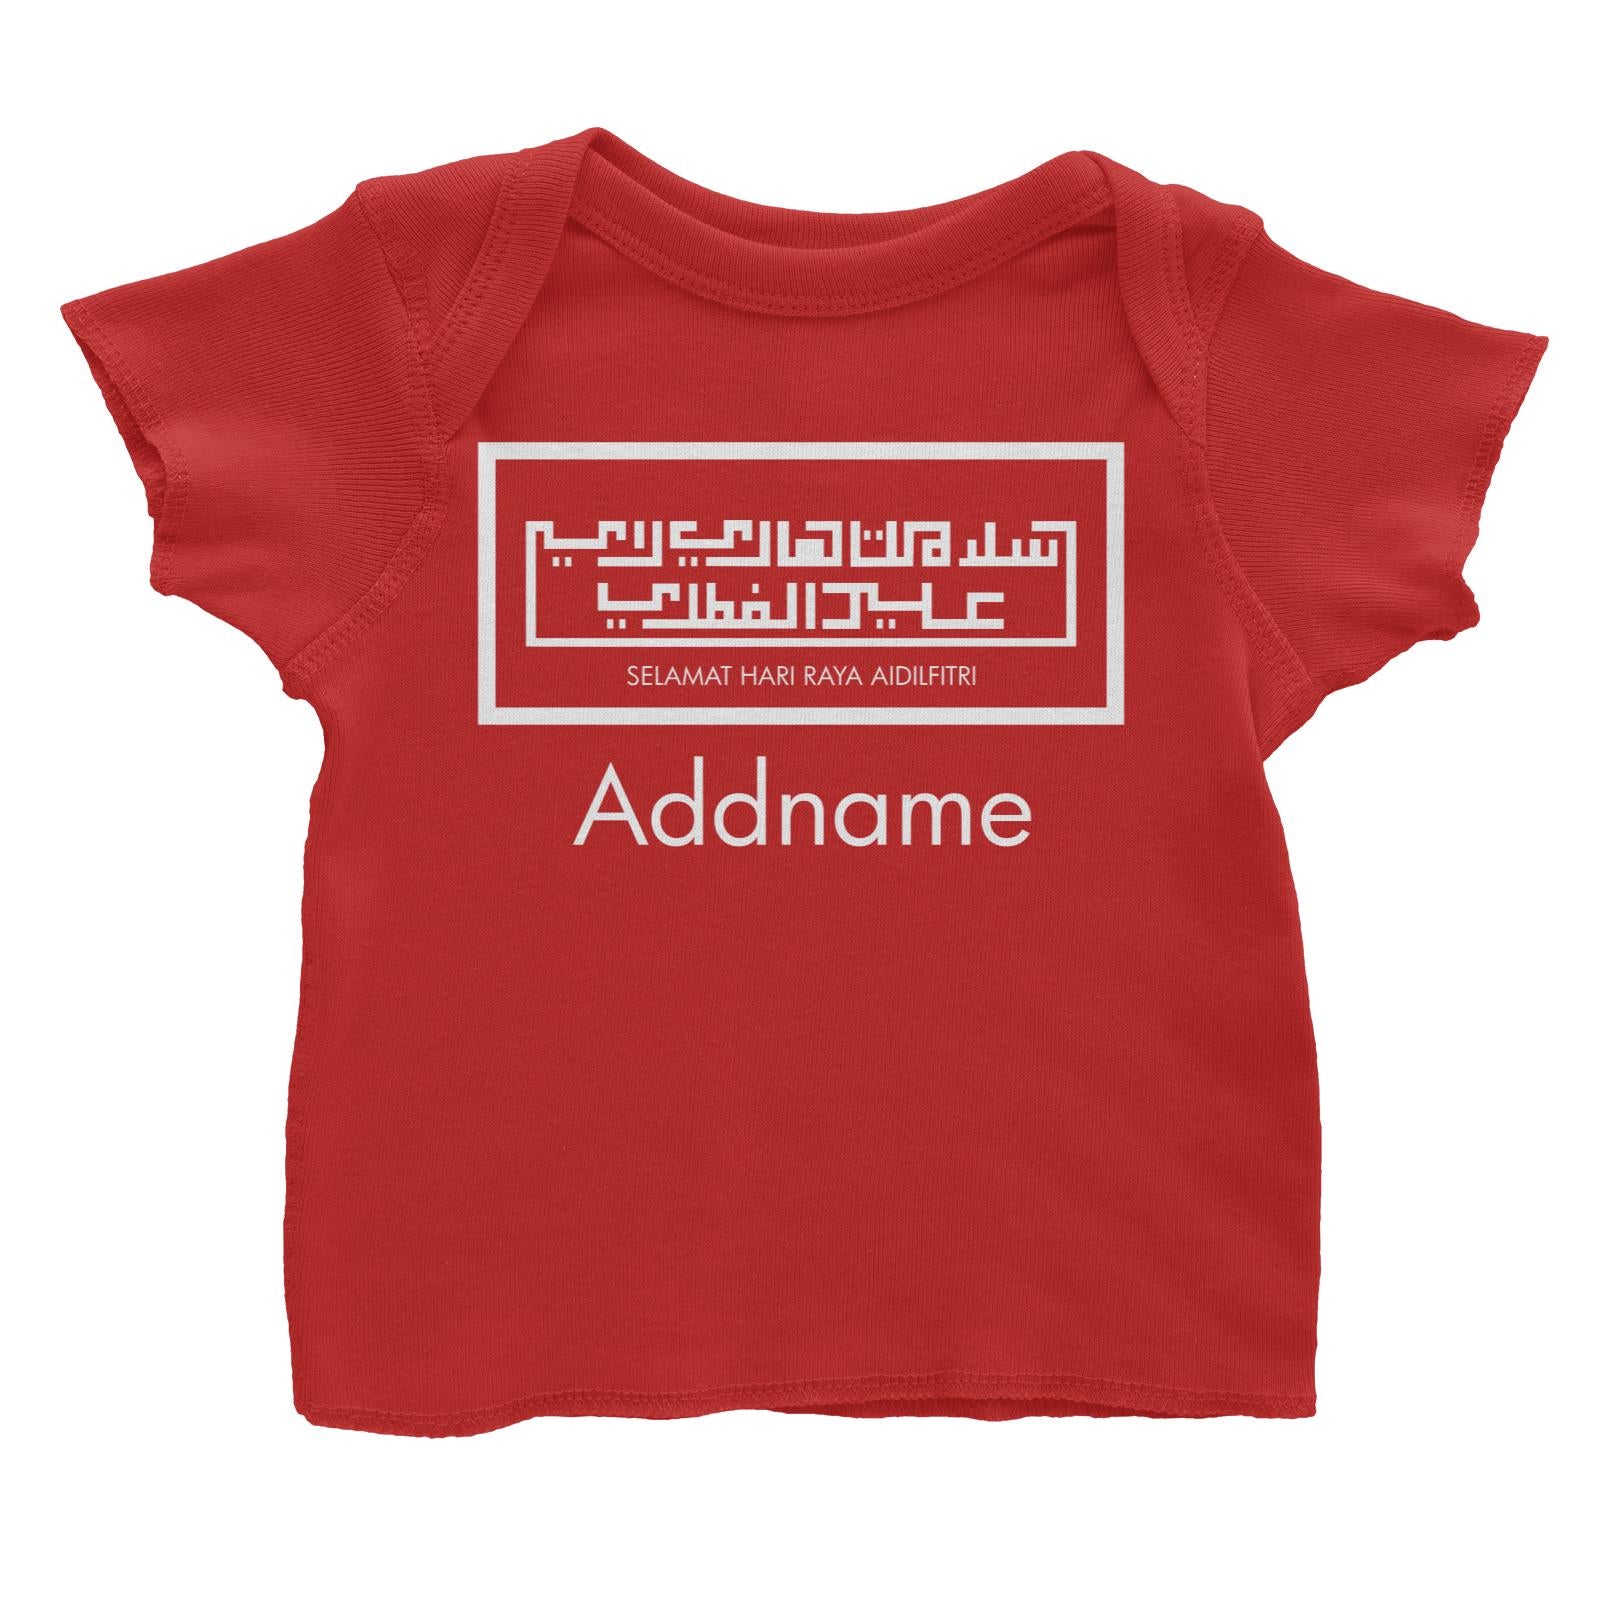 Selamat Hari Raya Aidilfitri Jawi With Box Typography Baby T-Shirt